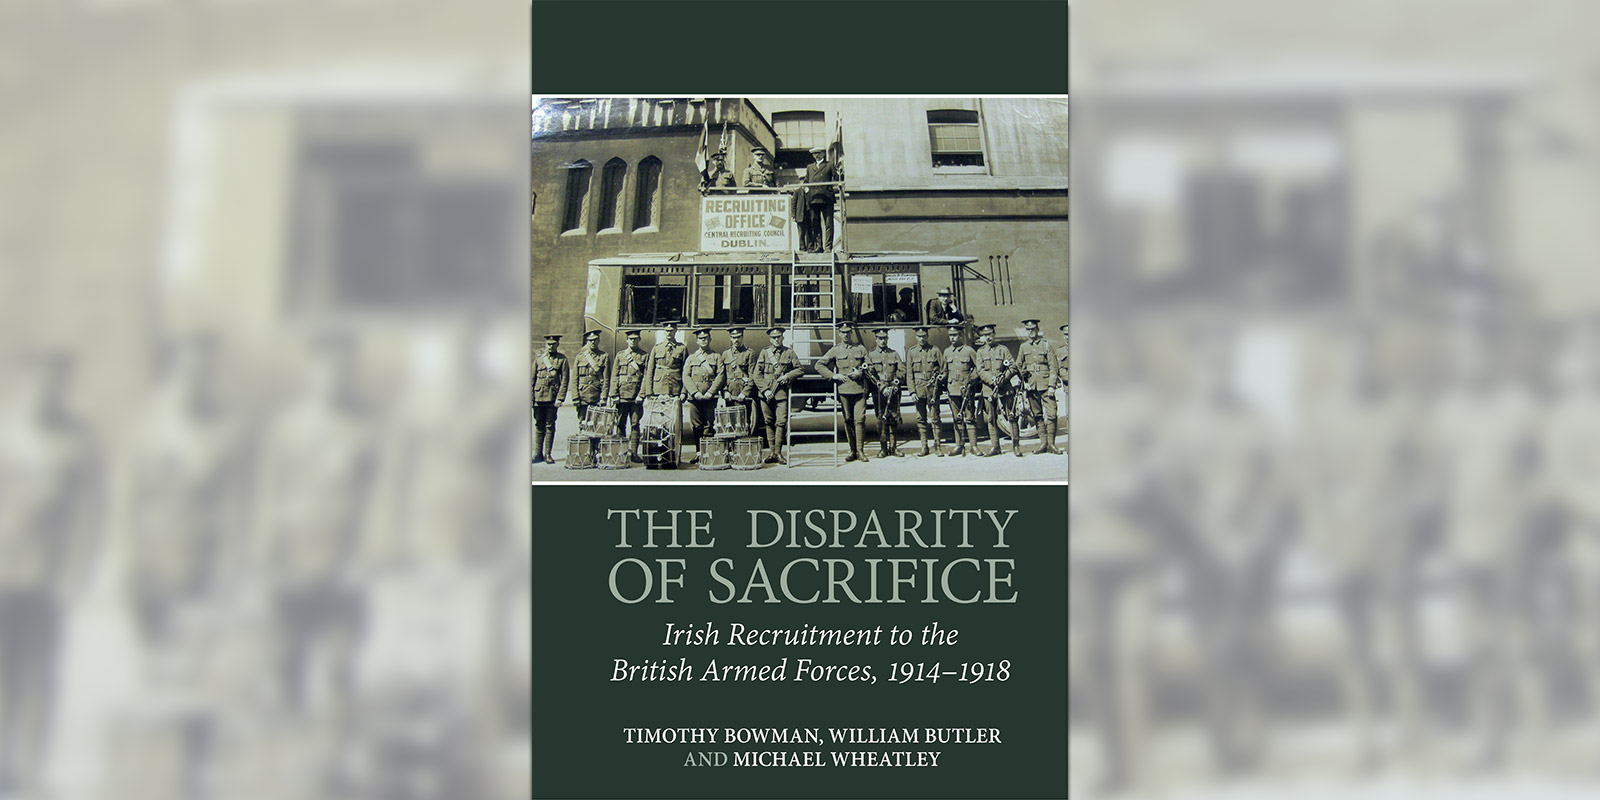 'The Disparity of Sacrifice' book cover